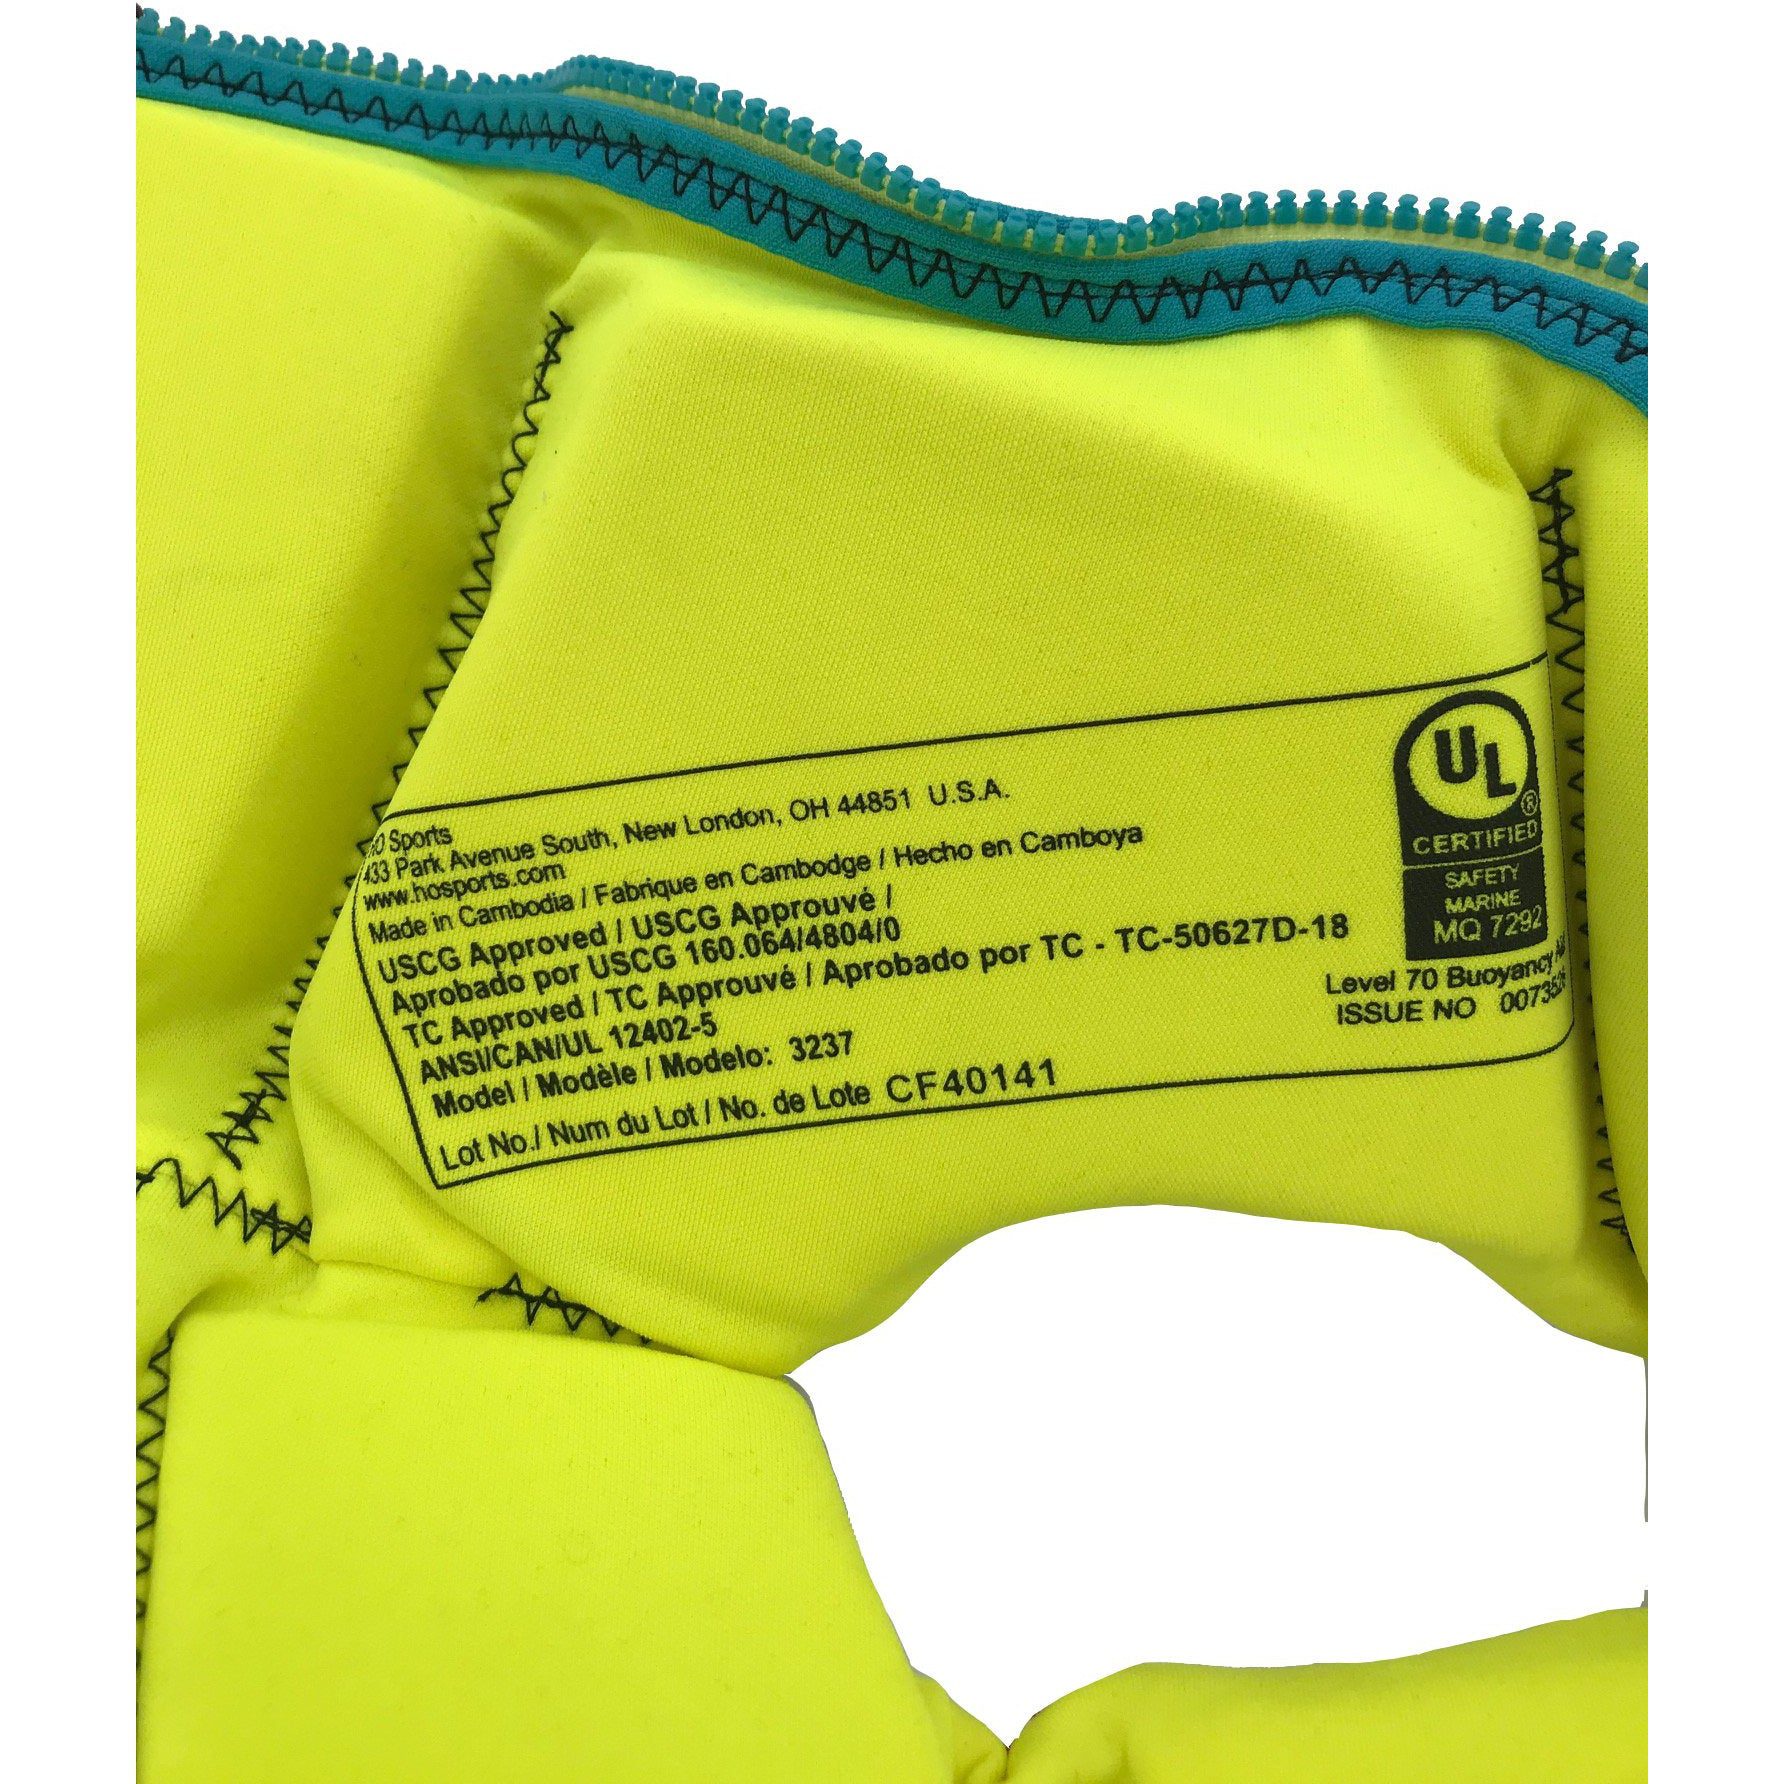 Hyperlite kids watersport vest and flotation device for children 33-55lbs